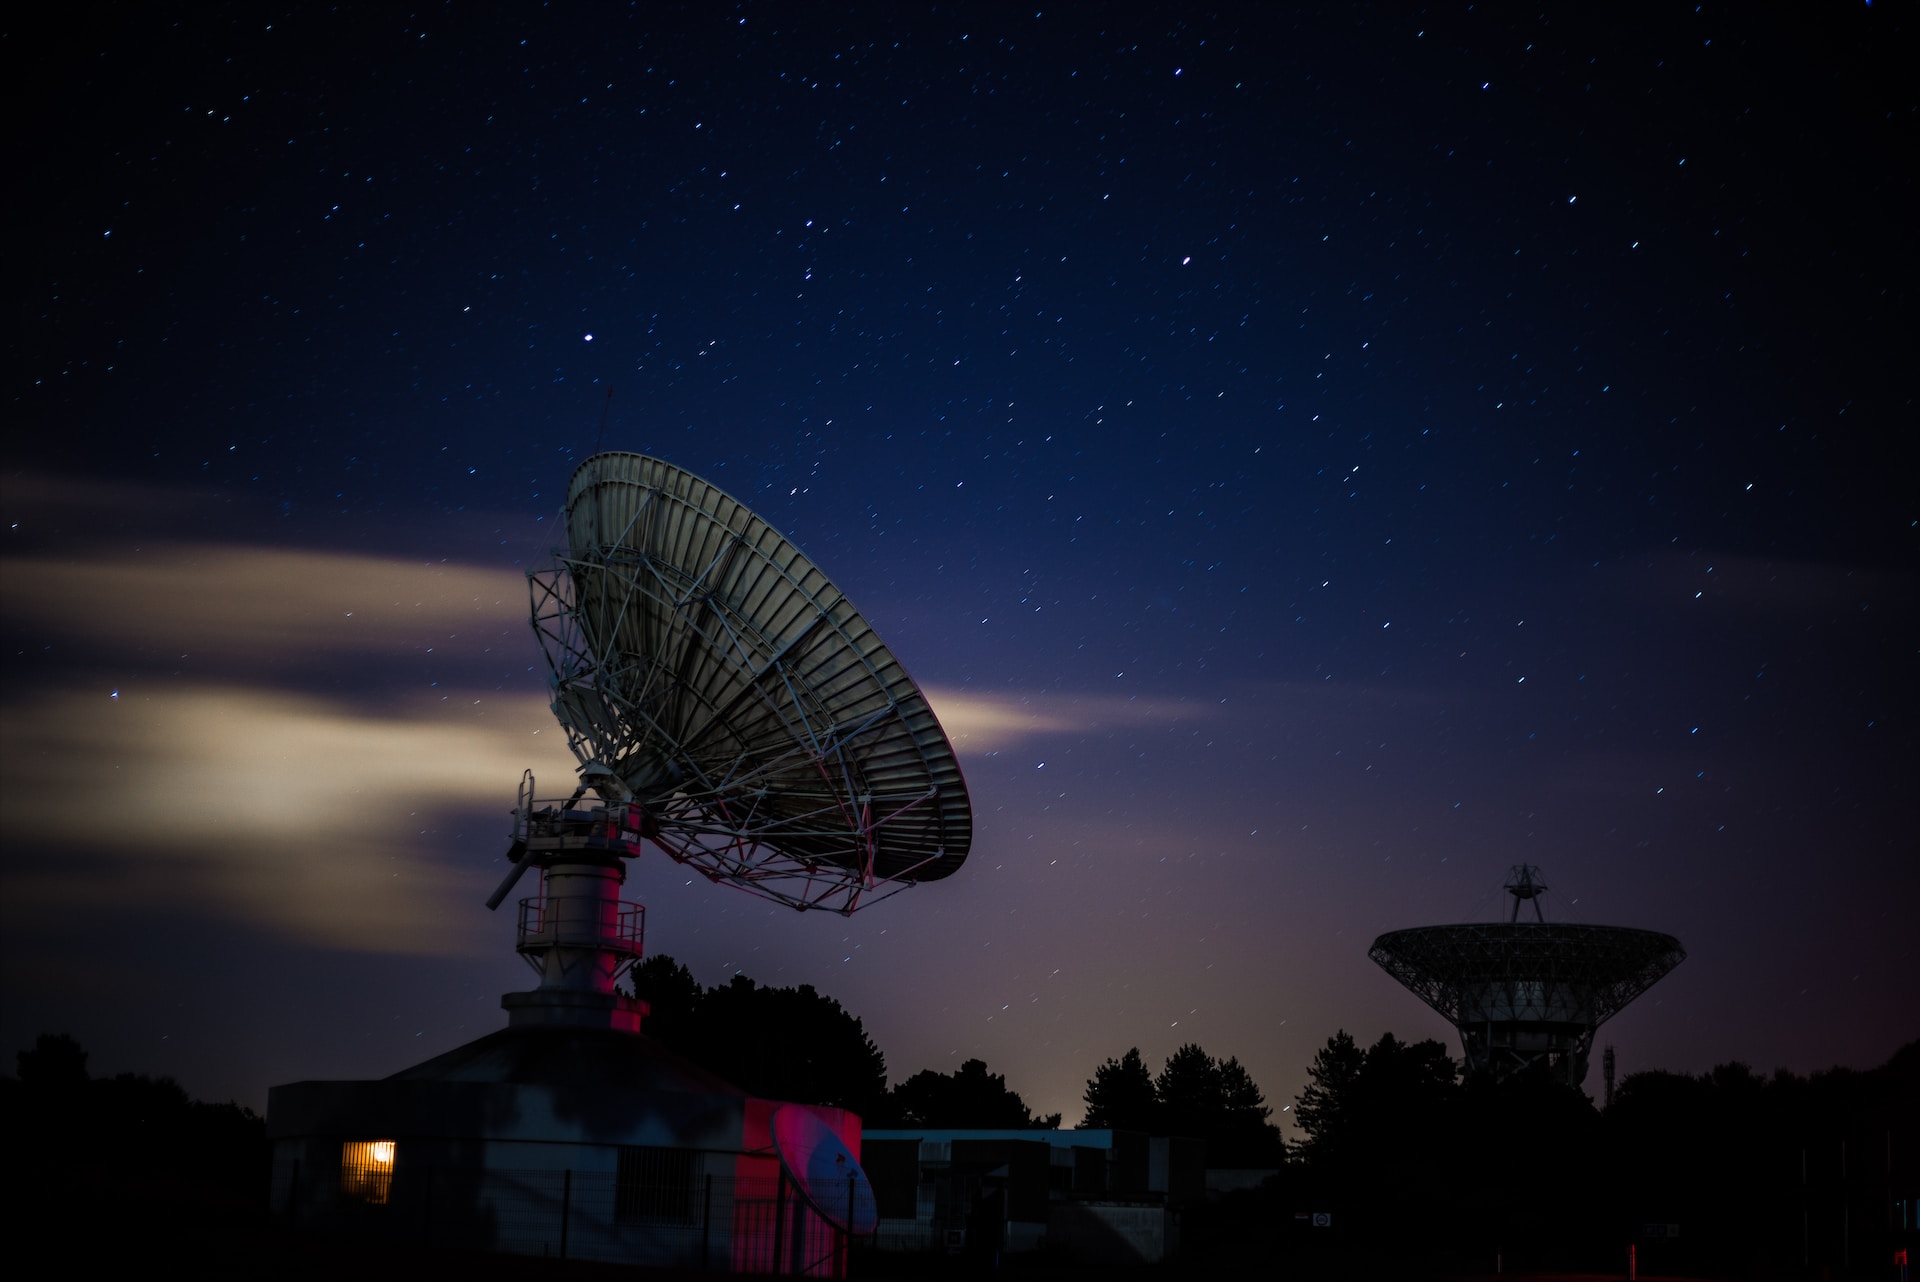 Radio telescope pointed at the night sky